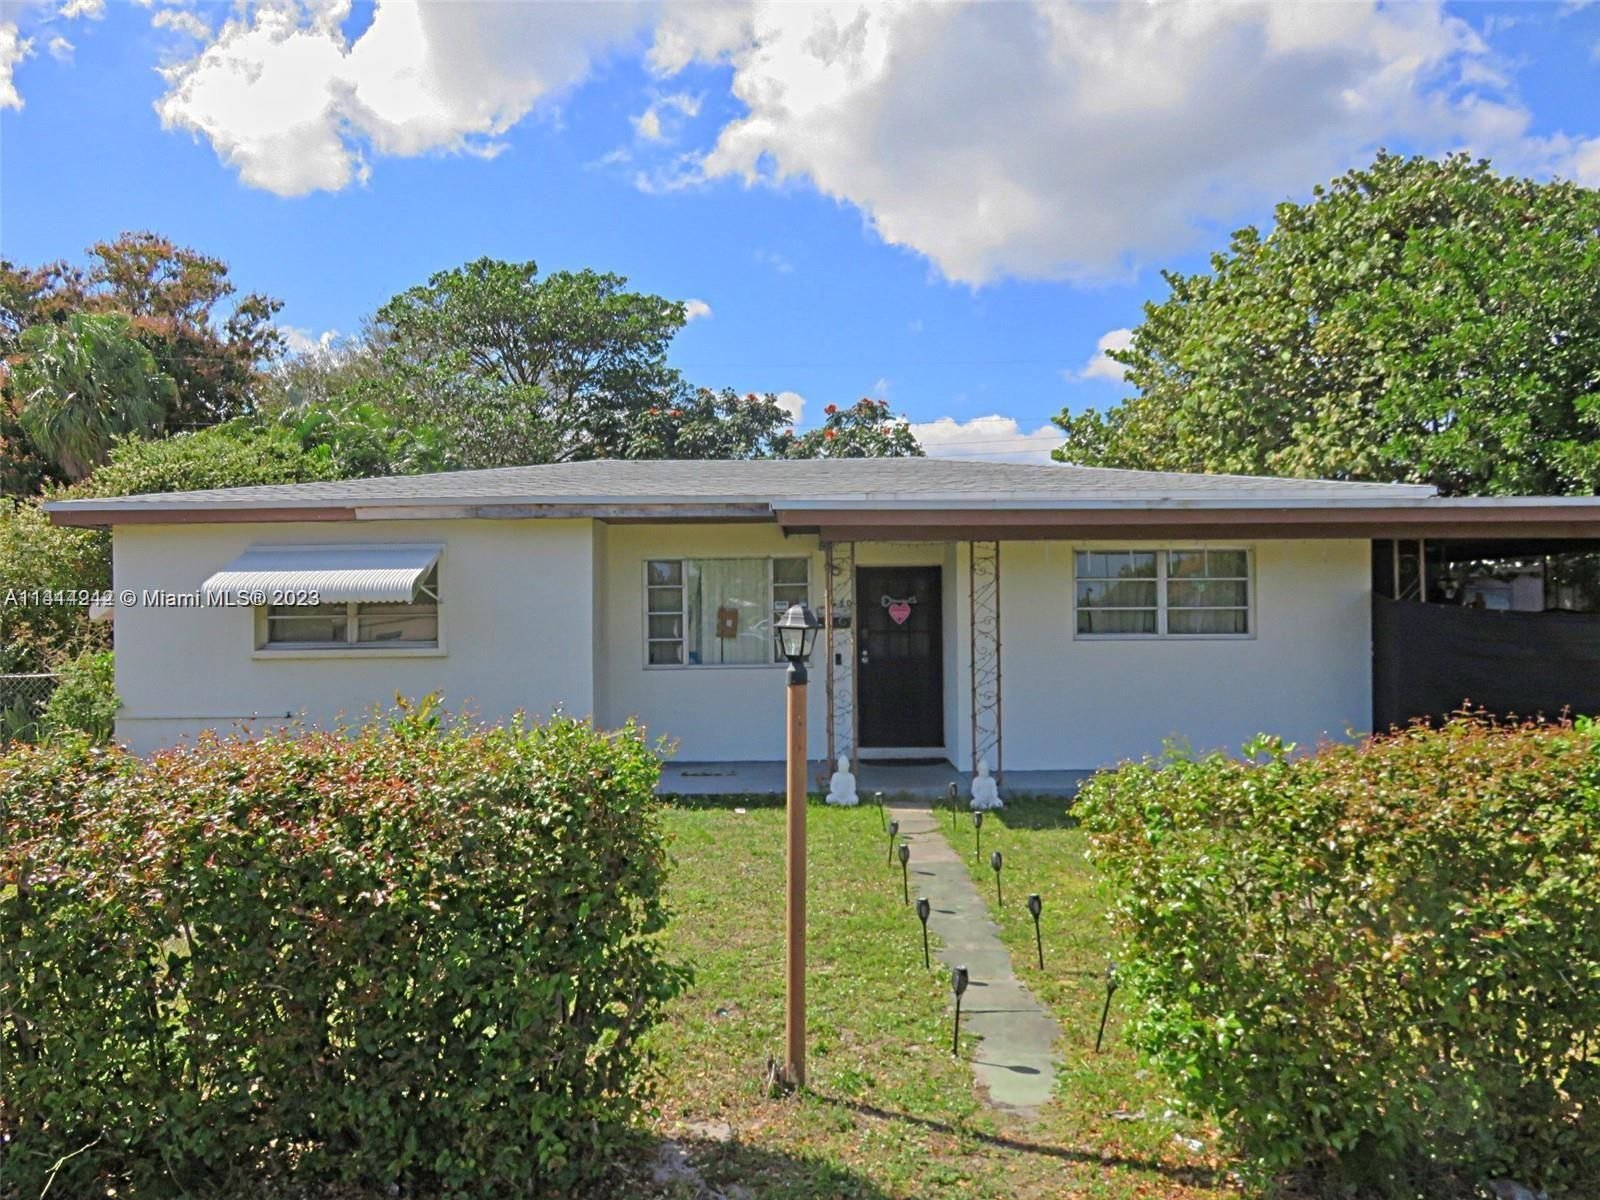 Real estate property located at 17820 8th Ave, Miami-Dade County, Miami, FL